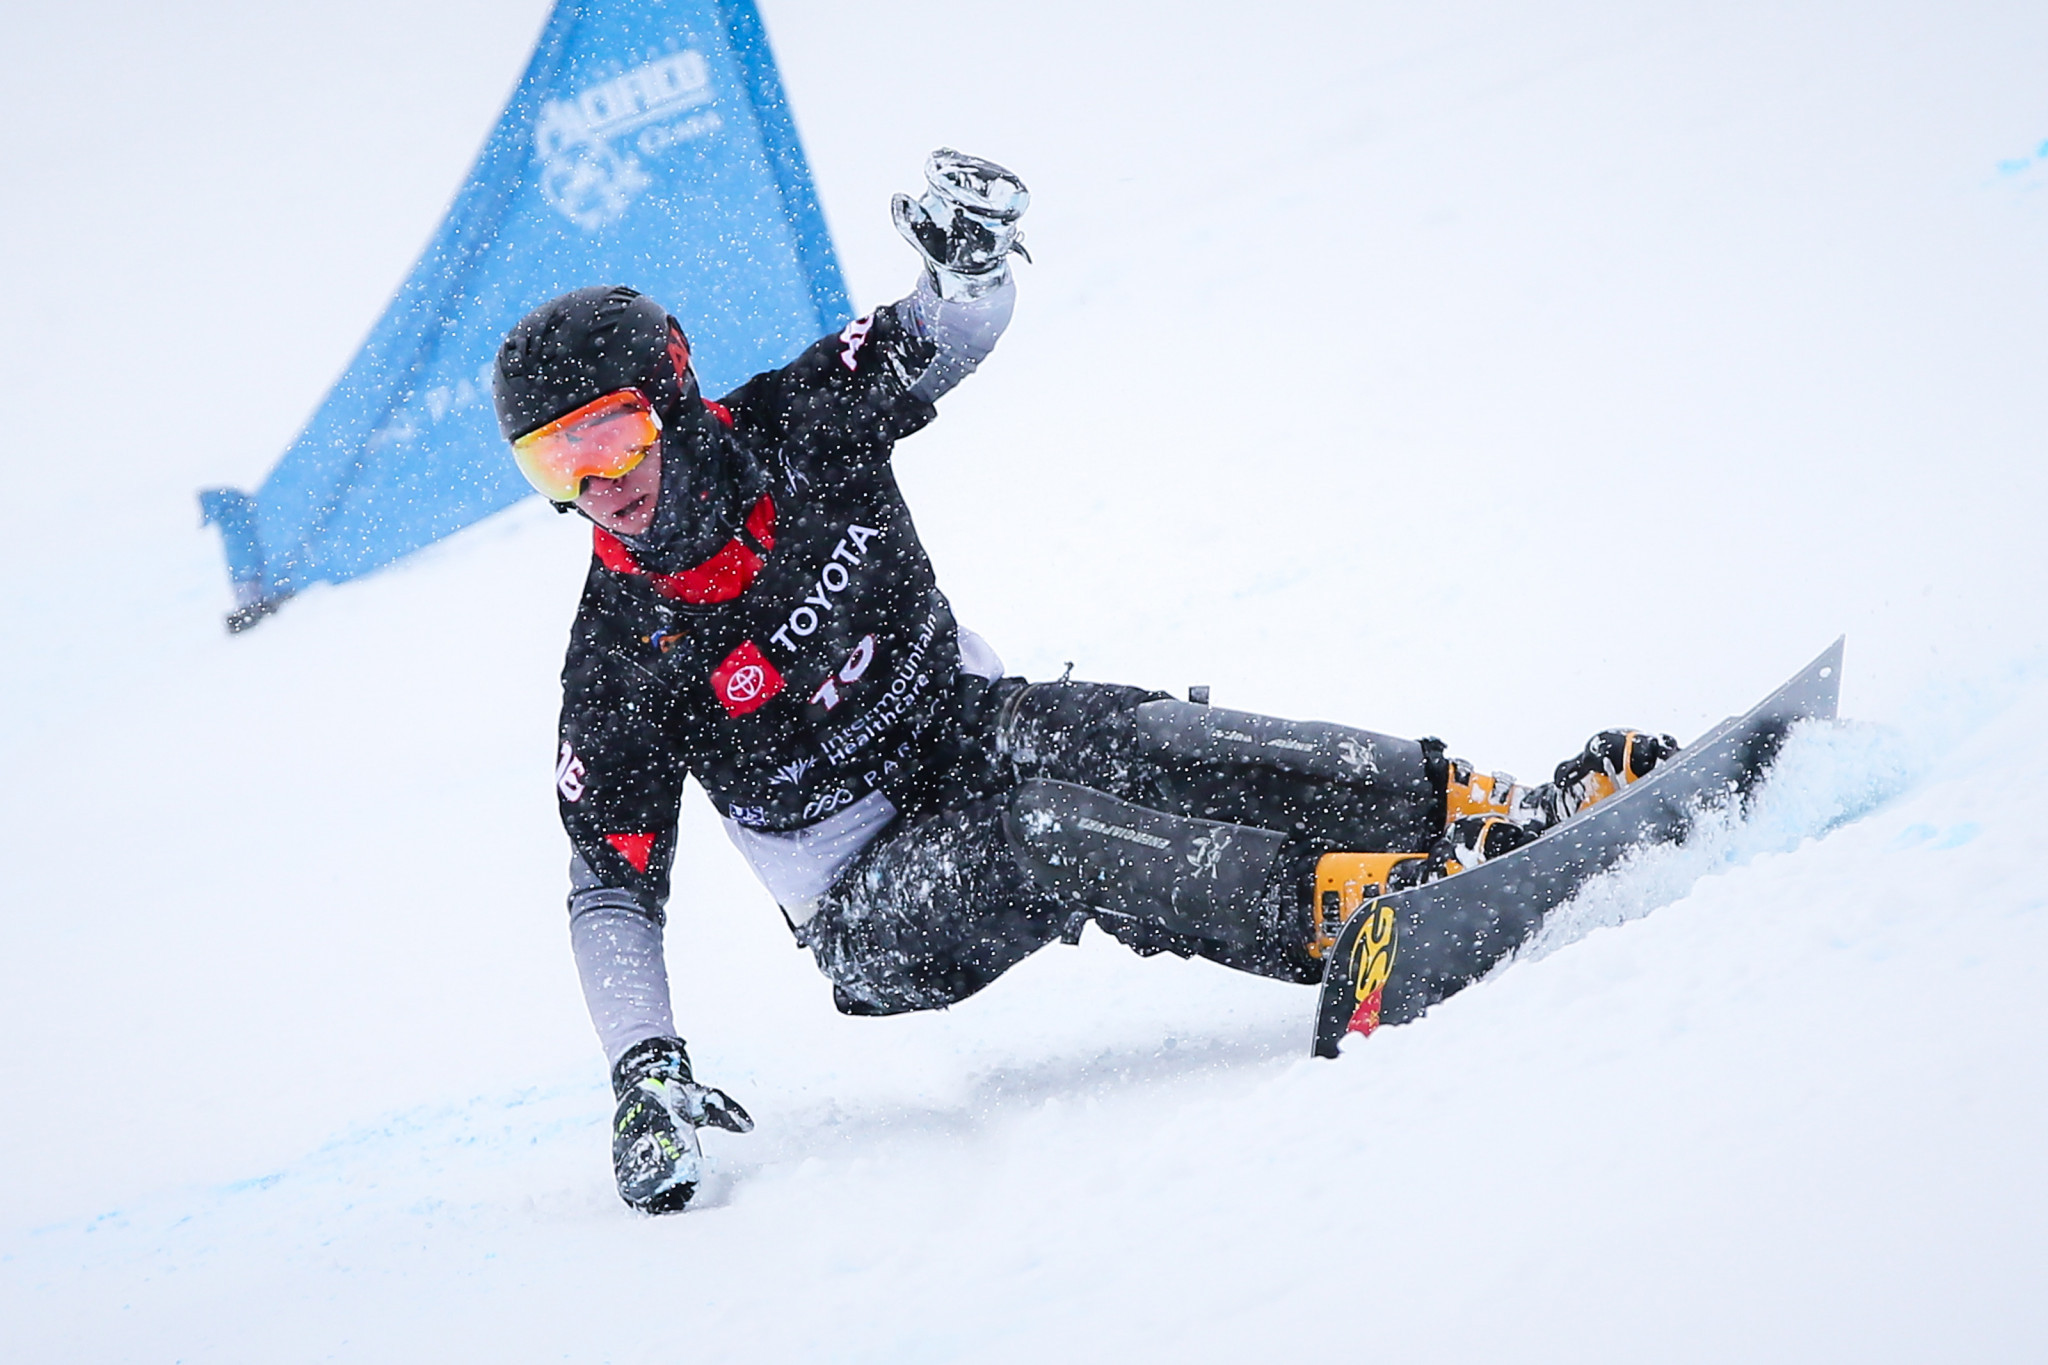 Loginov to defend slalom titles at FIS Snowboard World Championships in Rogla